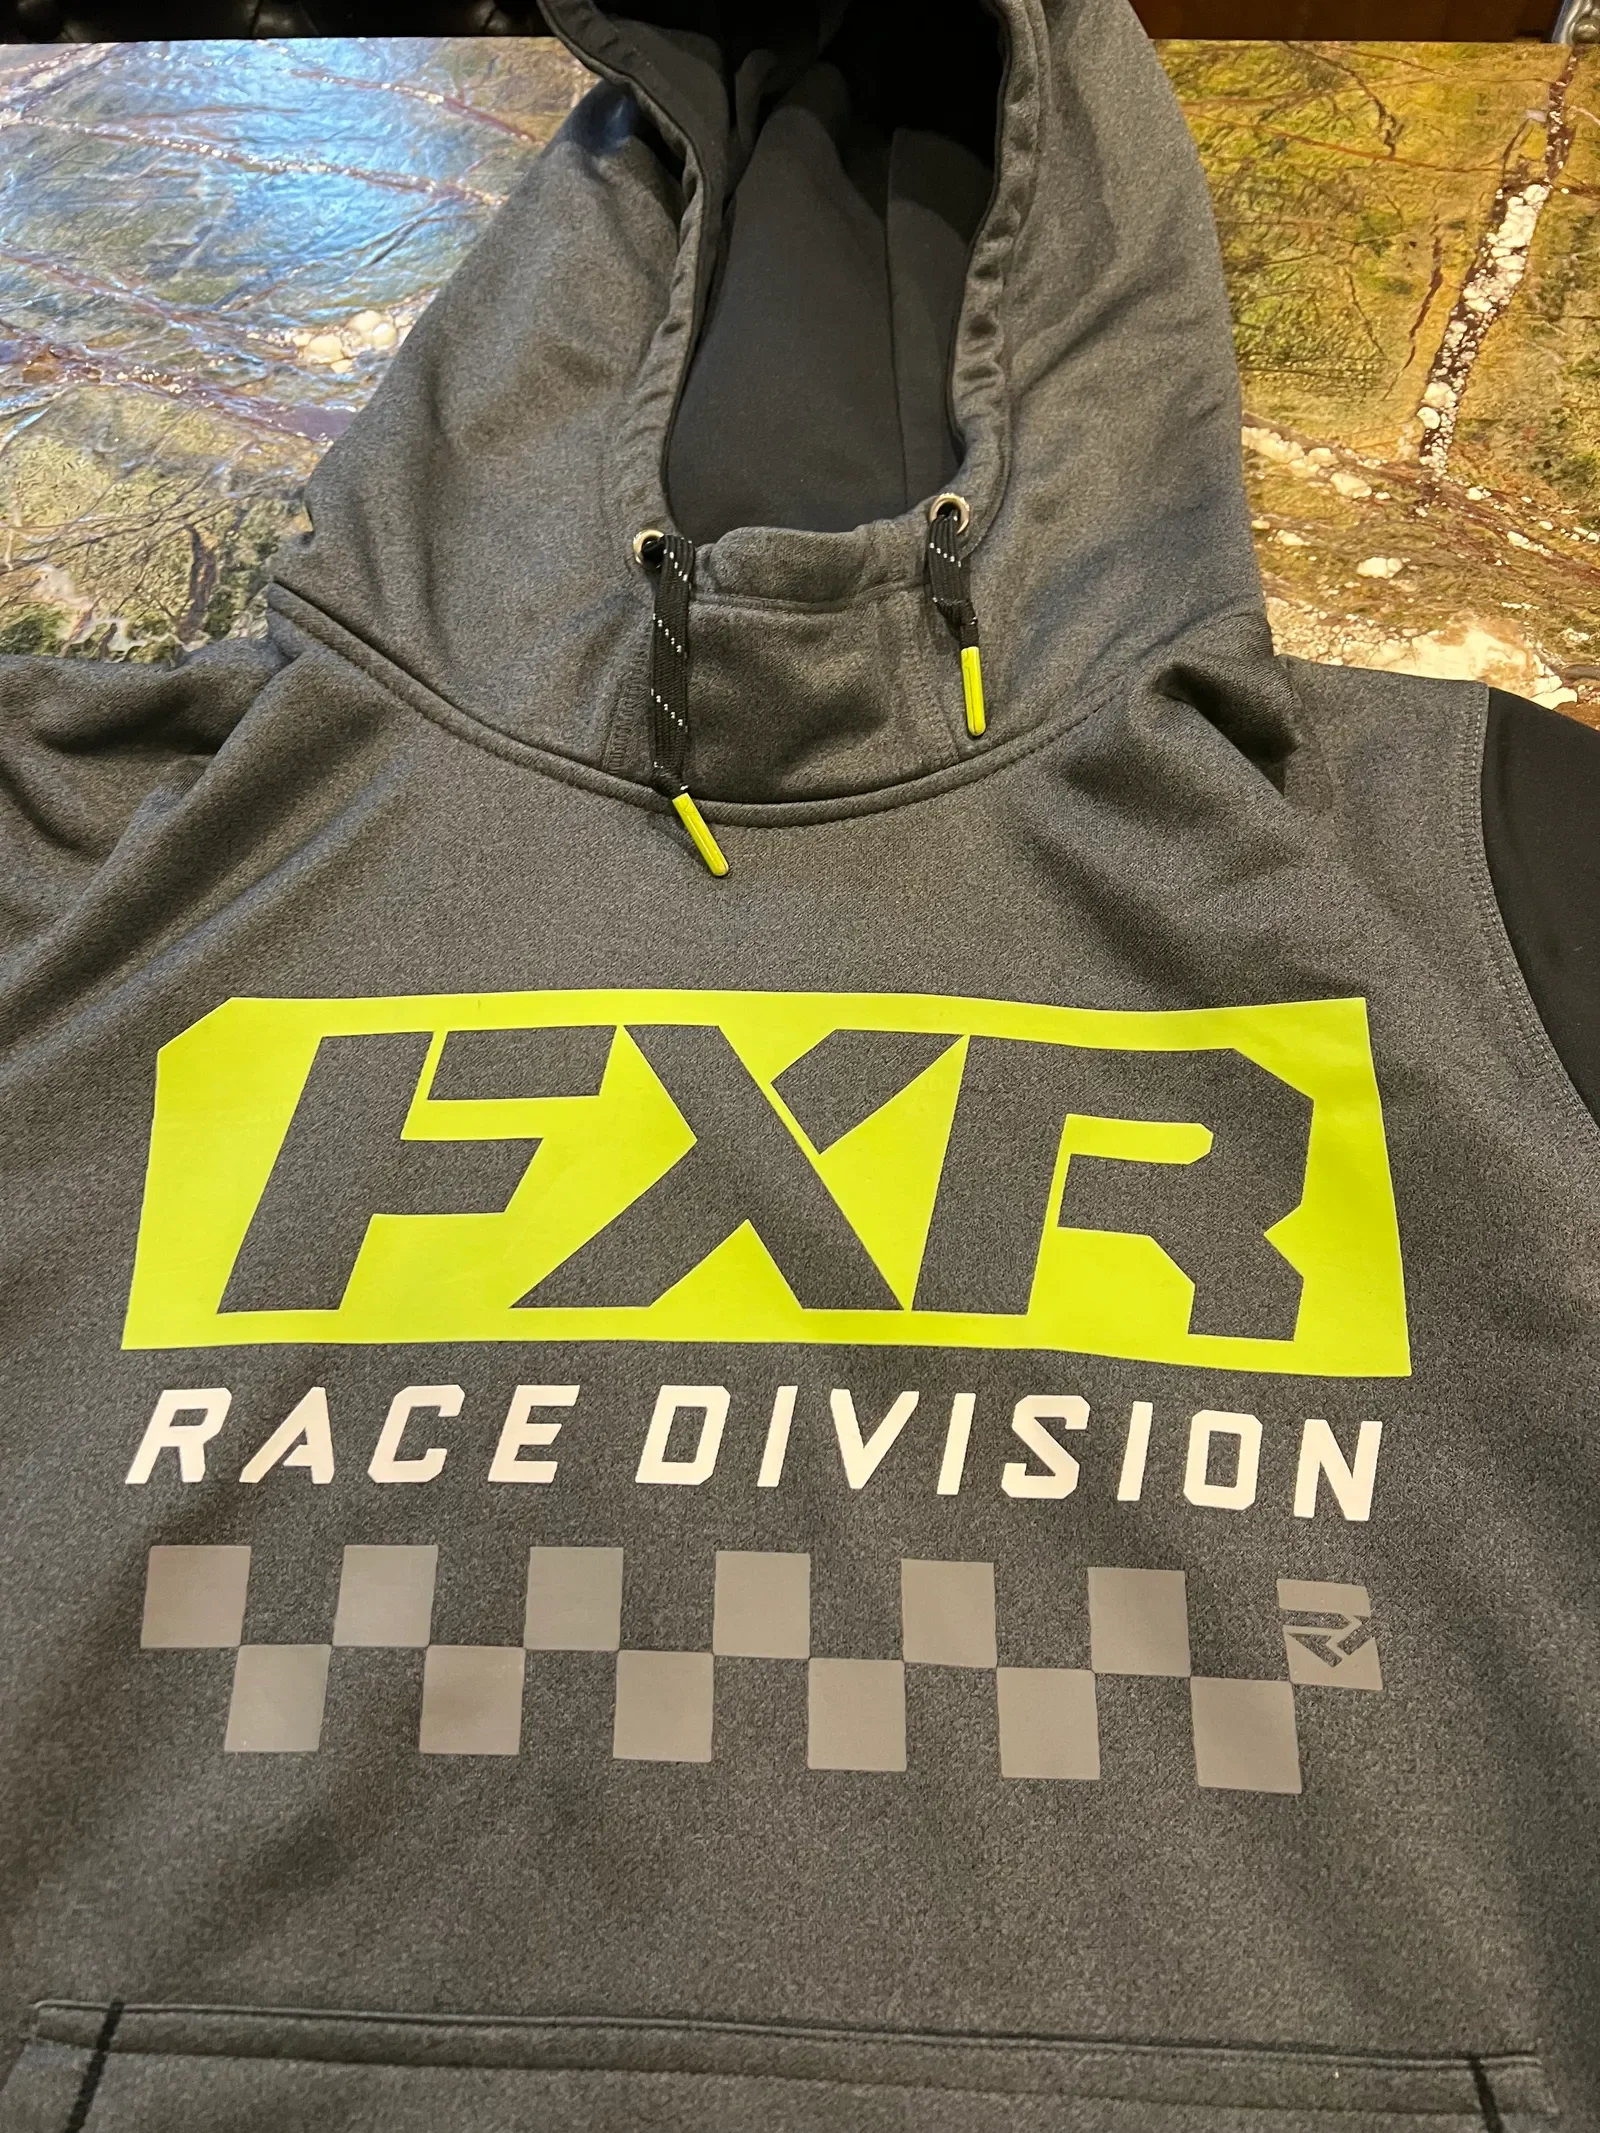 FXR Race Division Hoodie